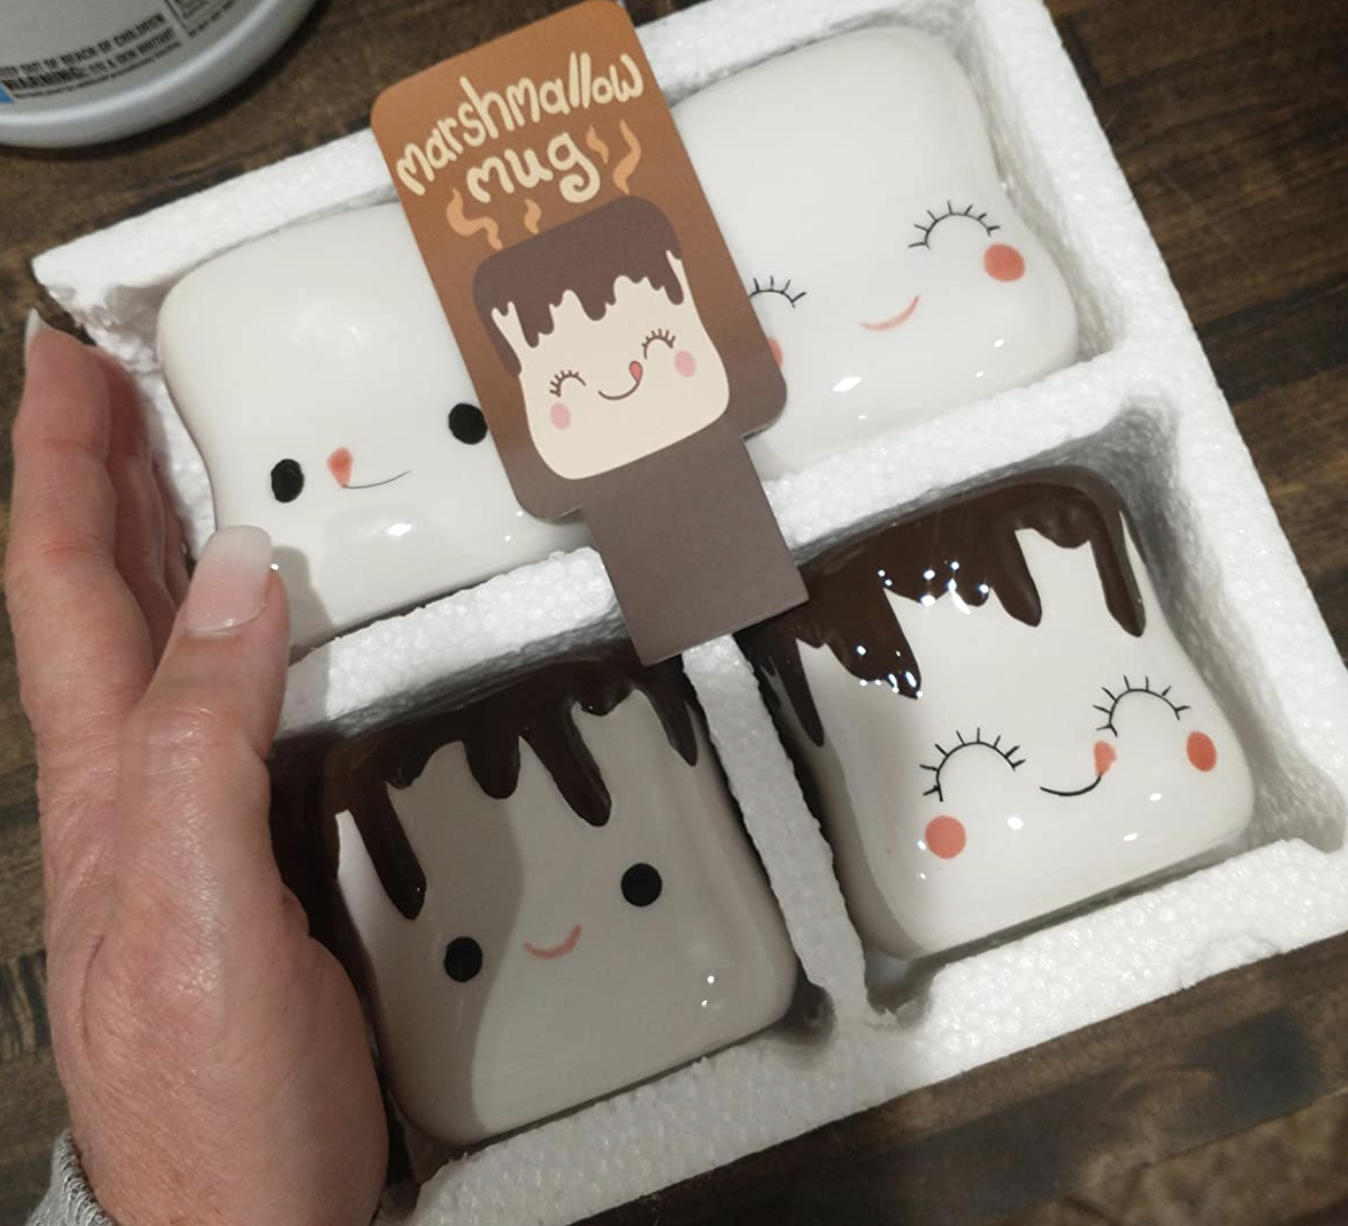 the four smiling marshmallow mugs